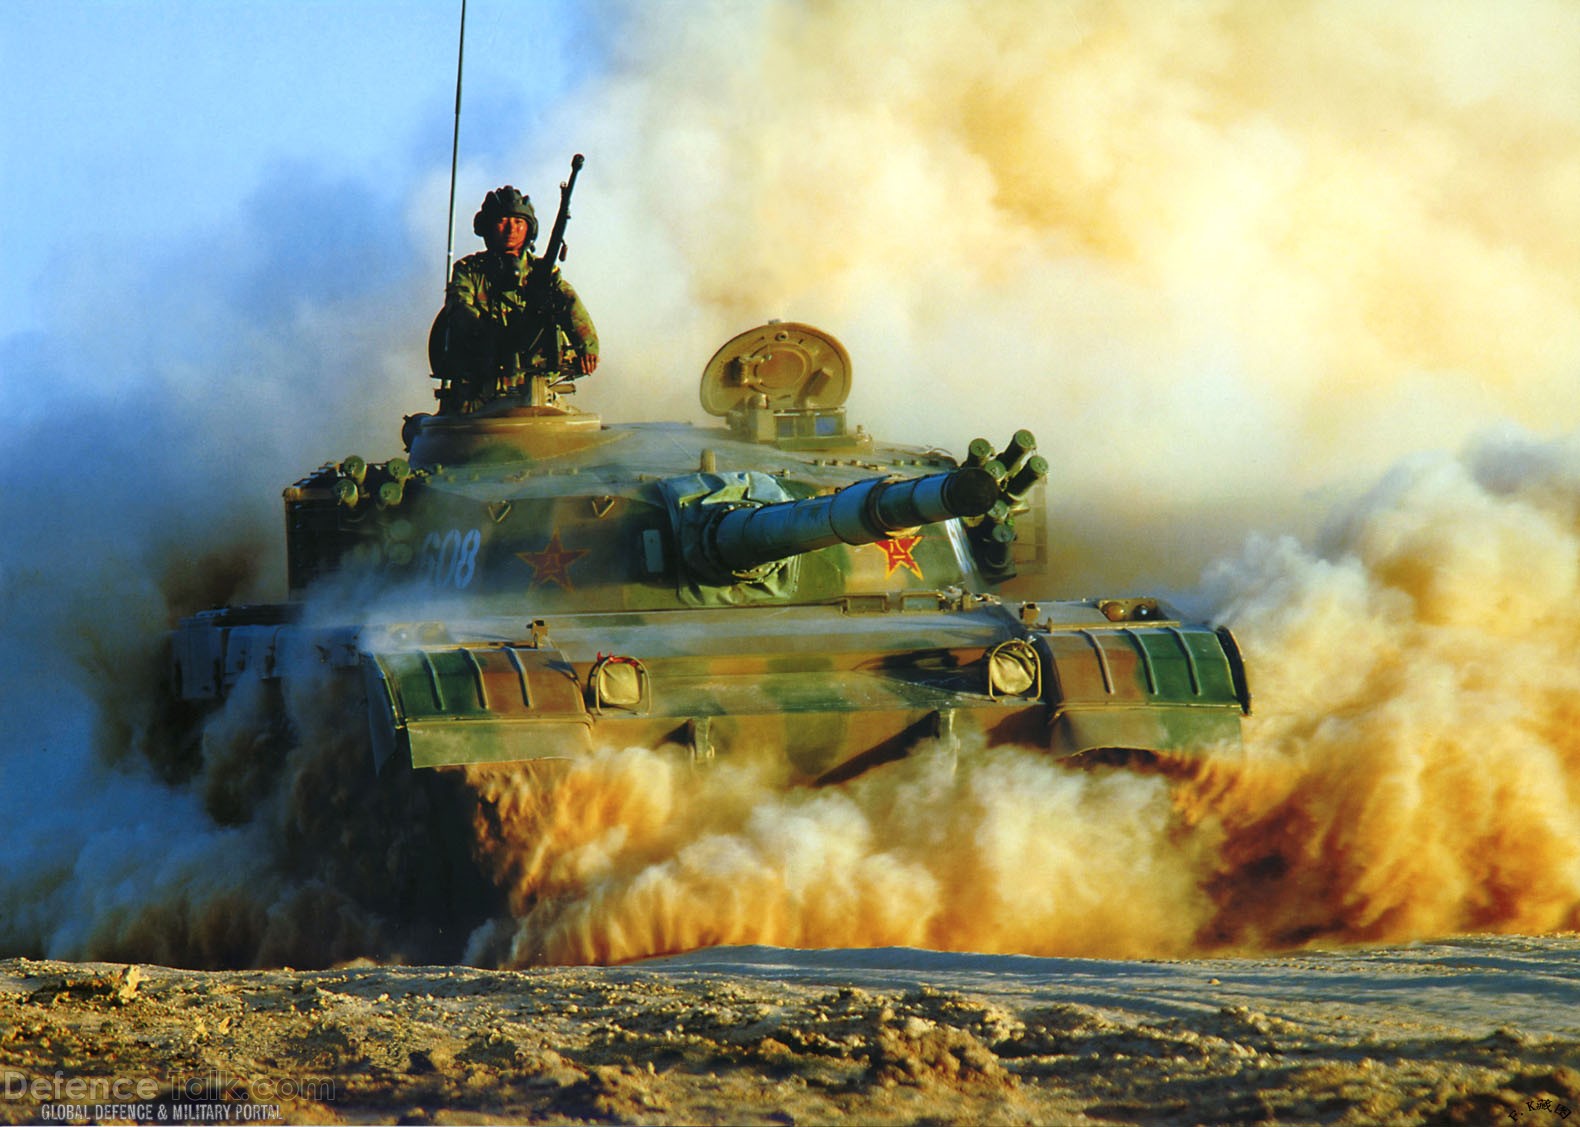 TYPE-96 MBT - Peopleâs Liberation Army